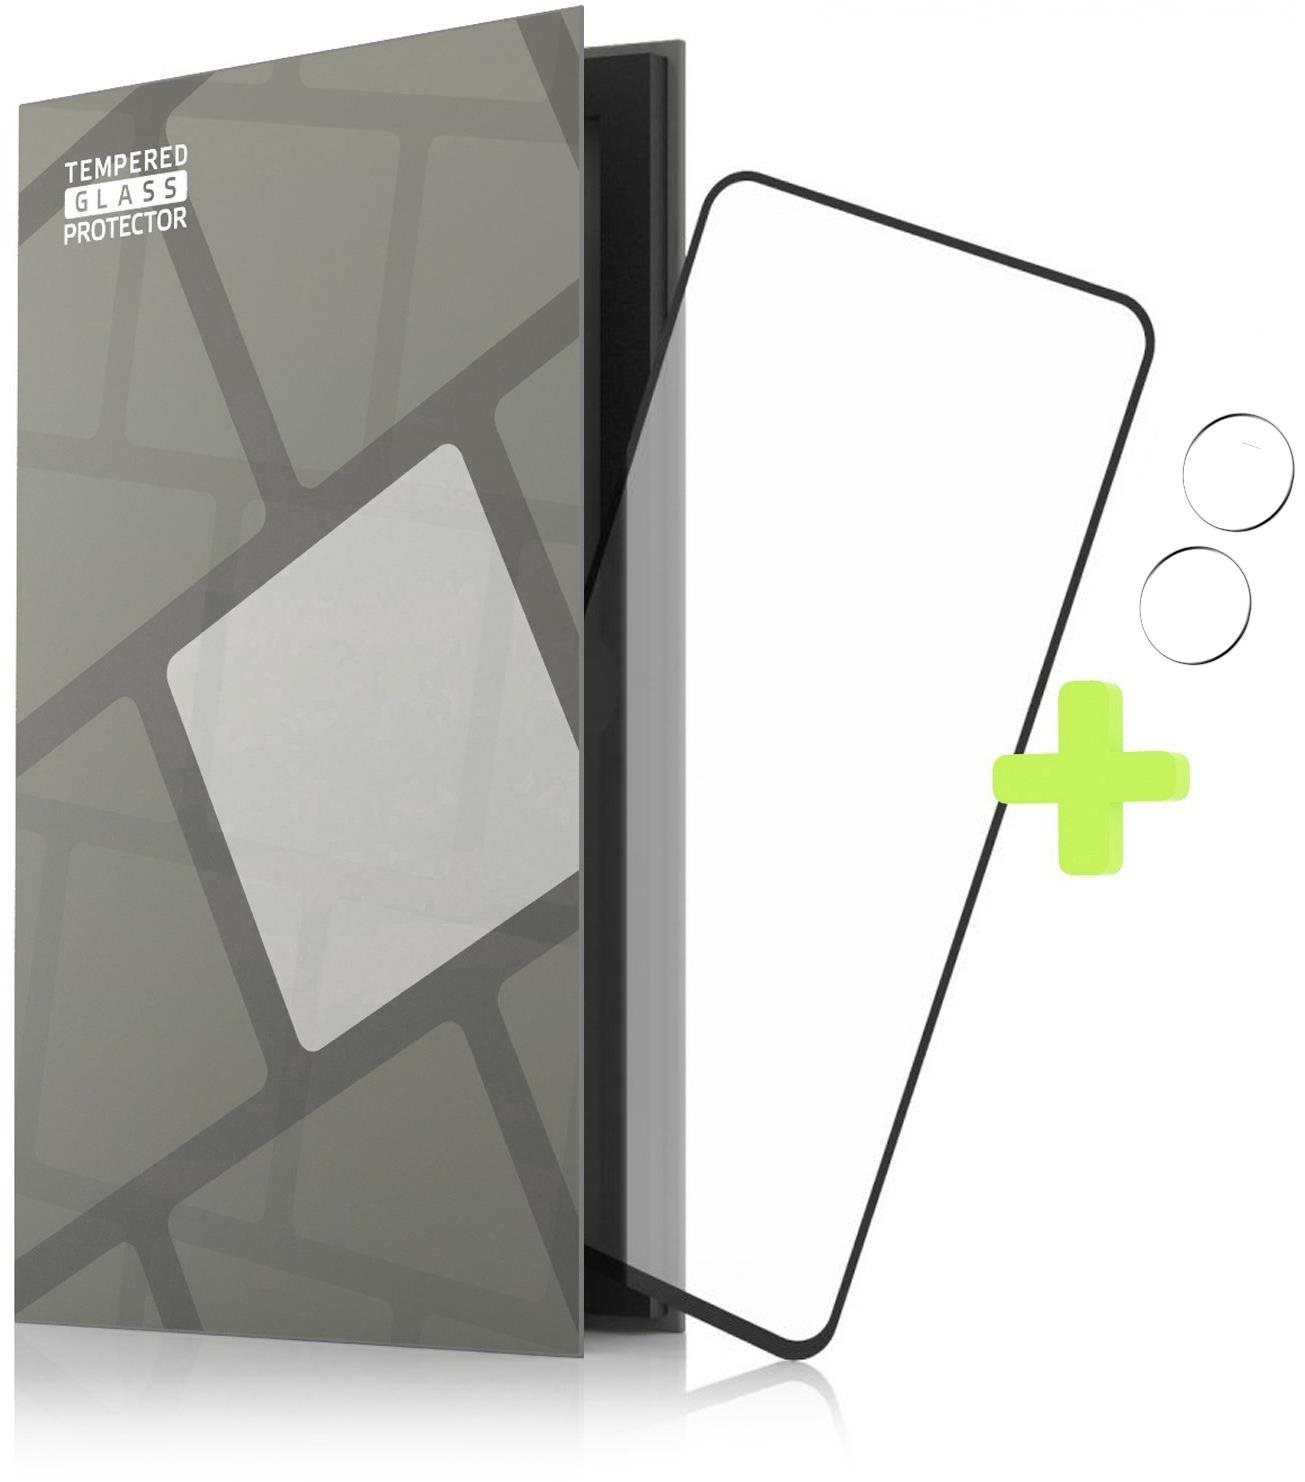 Üvegfólia Tempered Glass Protector Asus Zenfone 9 üvegfólia - fekete keret + kamera védő fólia